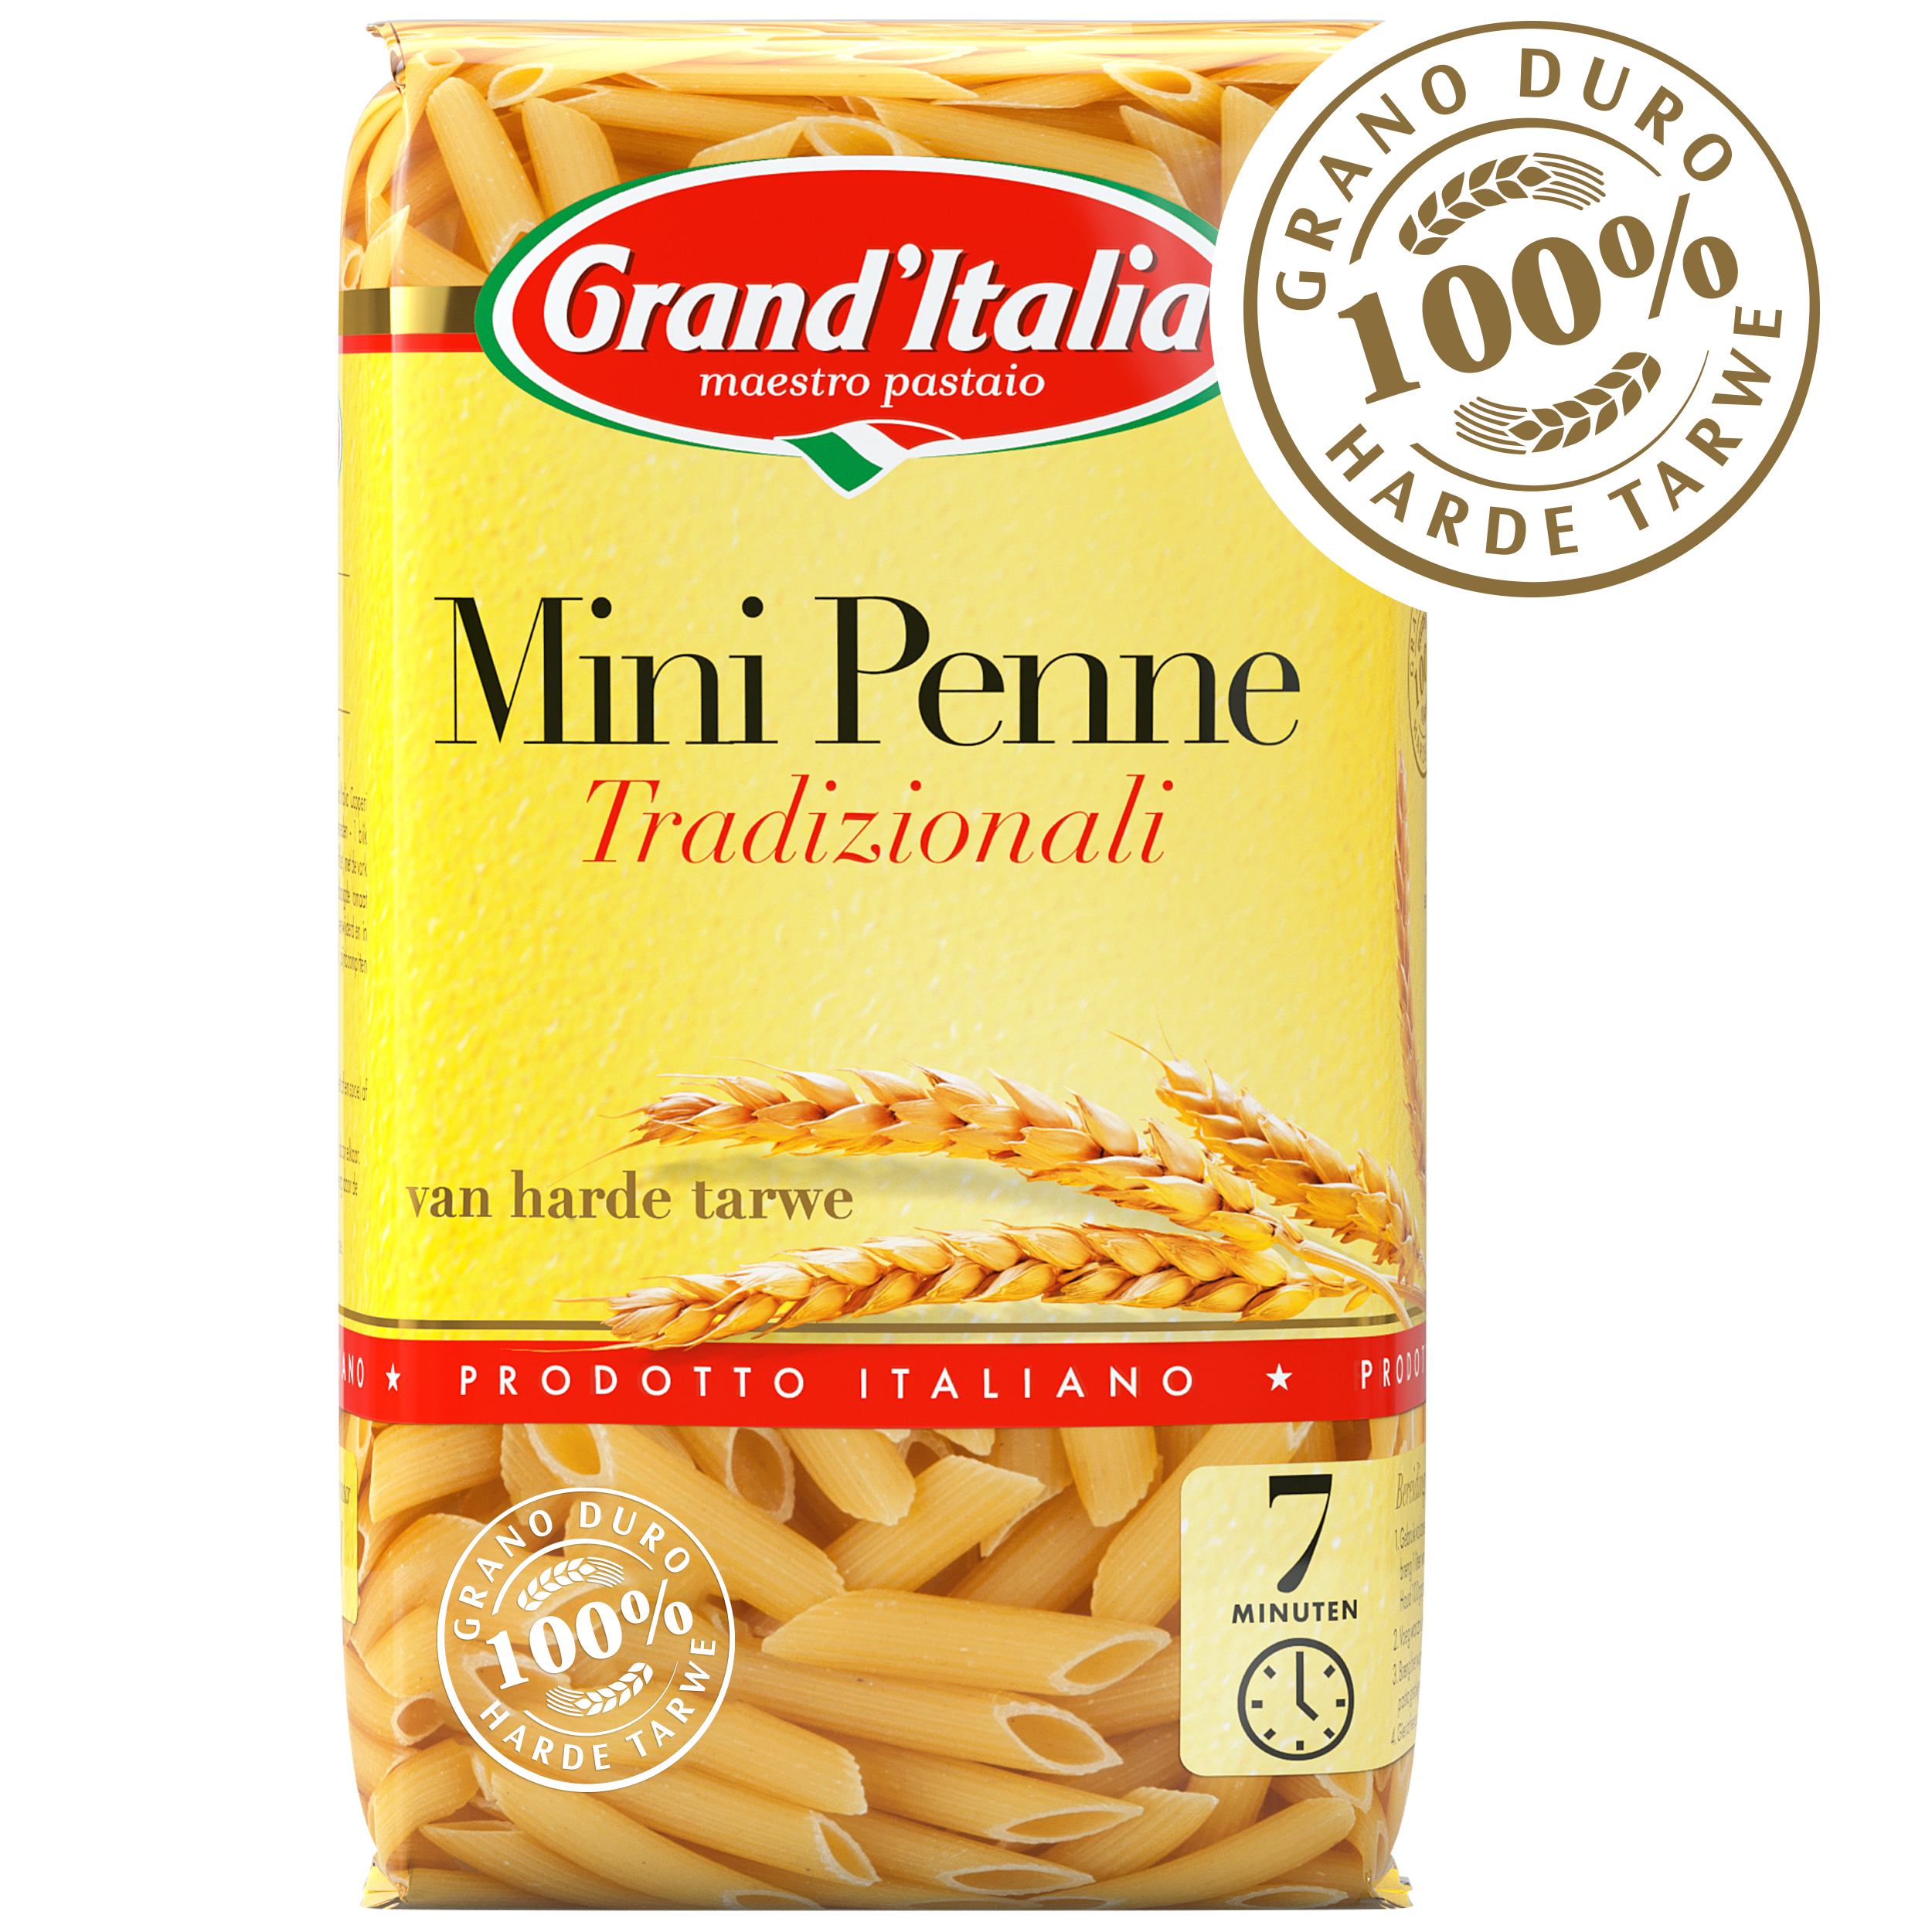 Pasta Mini Penne Tradizionali 350g claim Grand'Italia